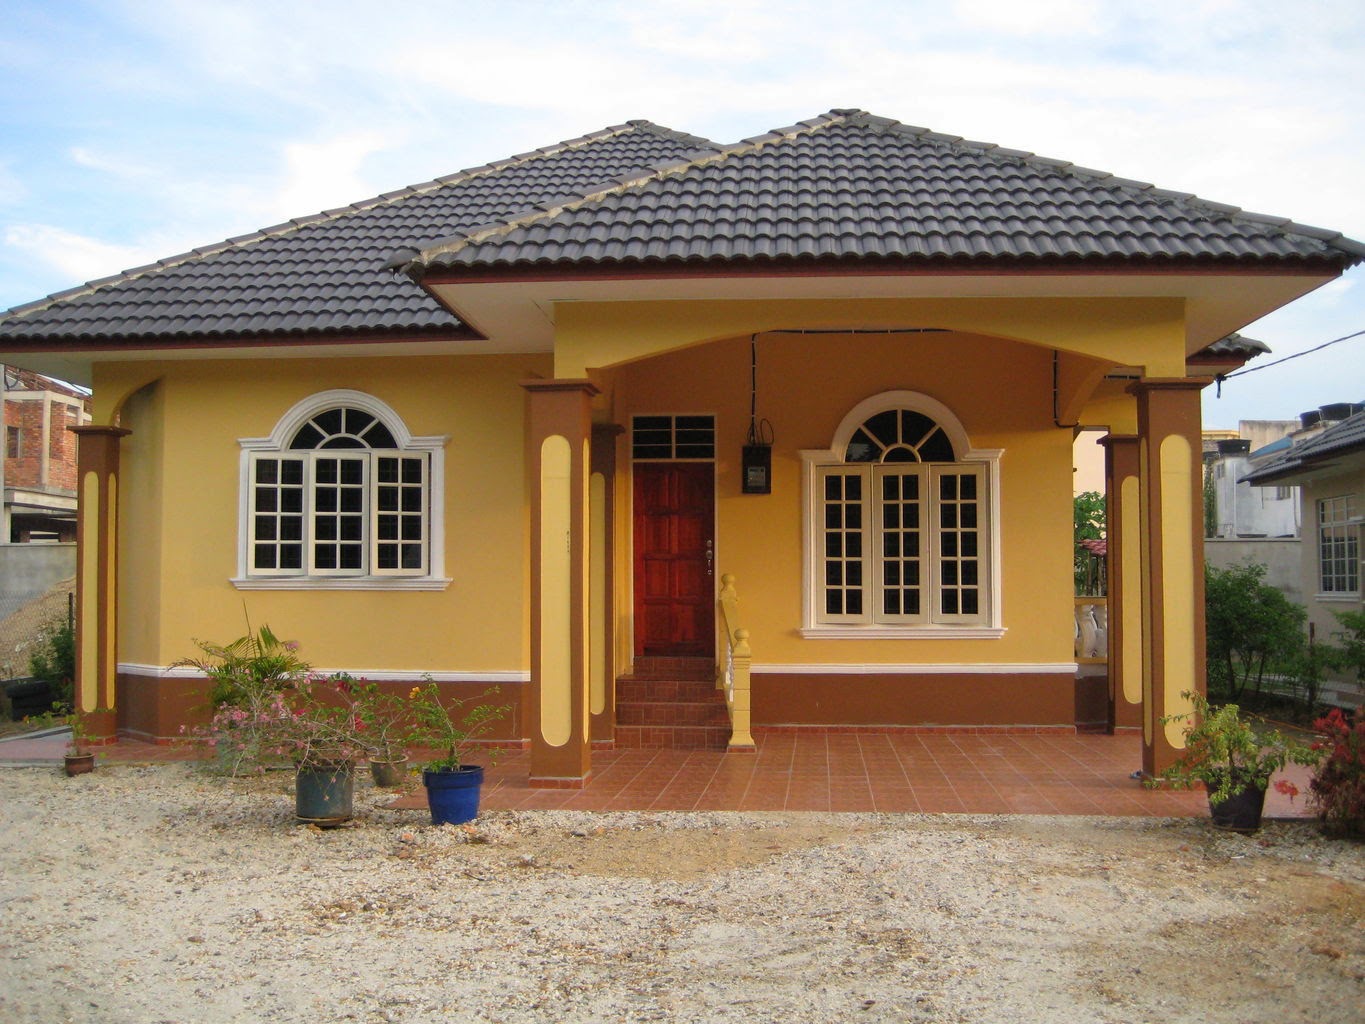 Desain teras rumah kampung dan desa | Buatrumahidaman.blogspot.com